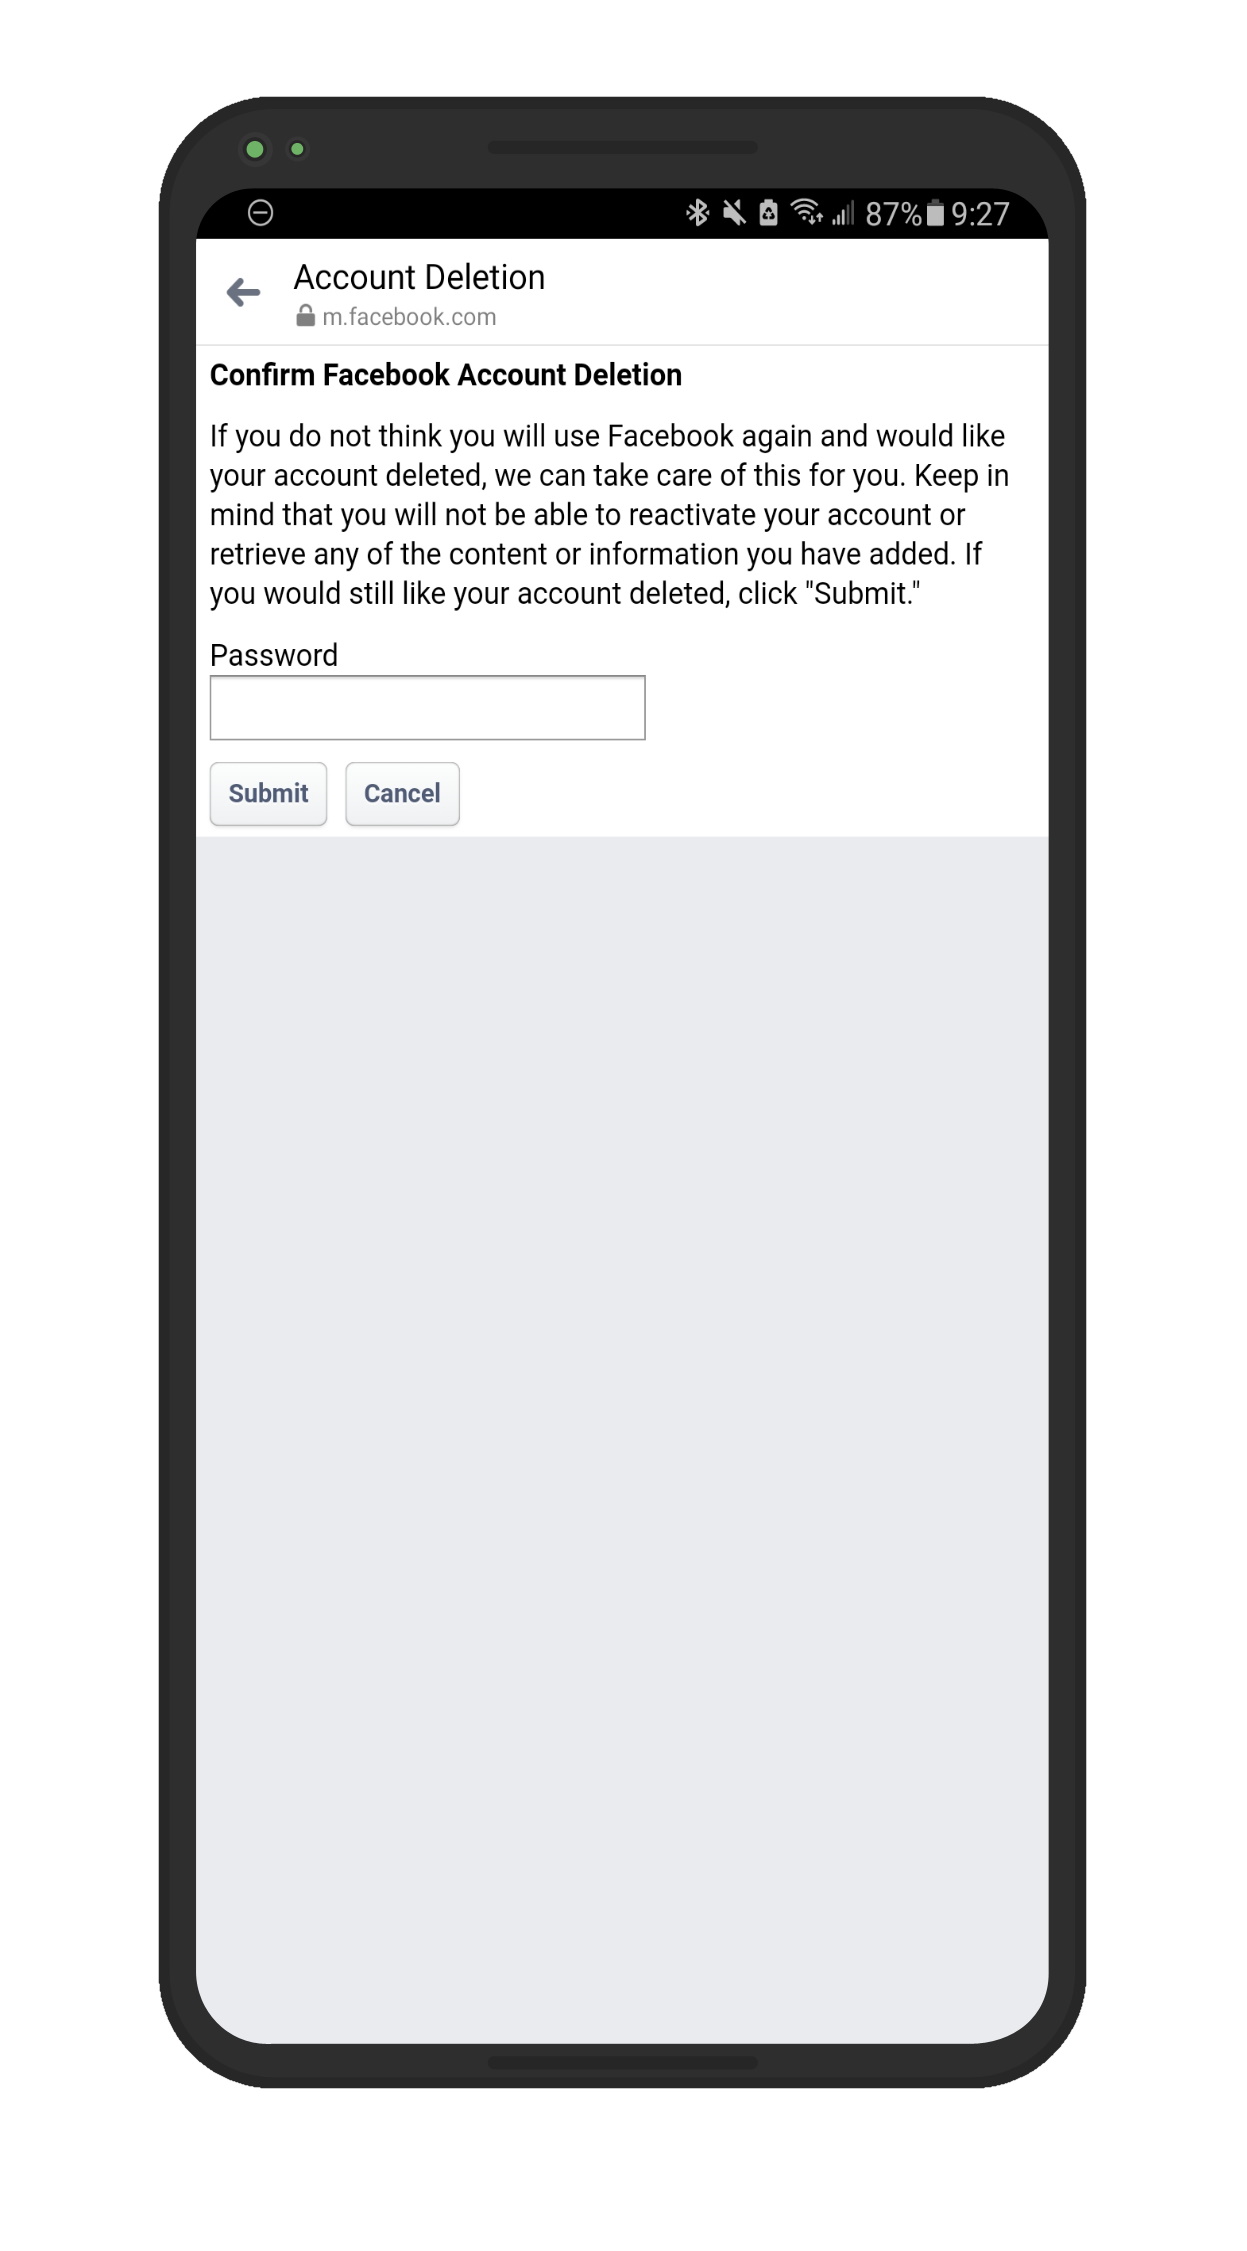 Confirm Facebook Account Deletion